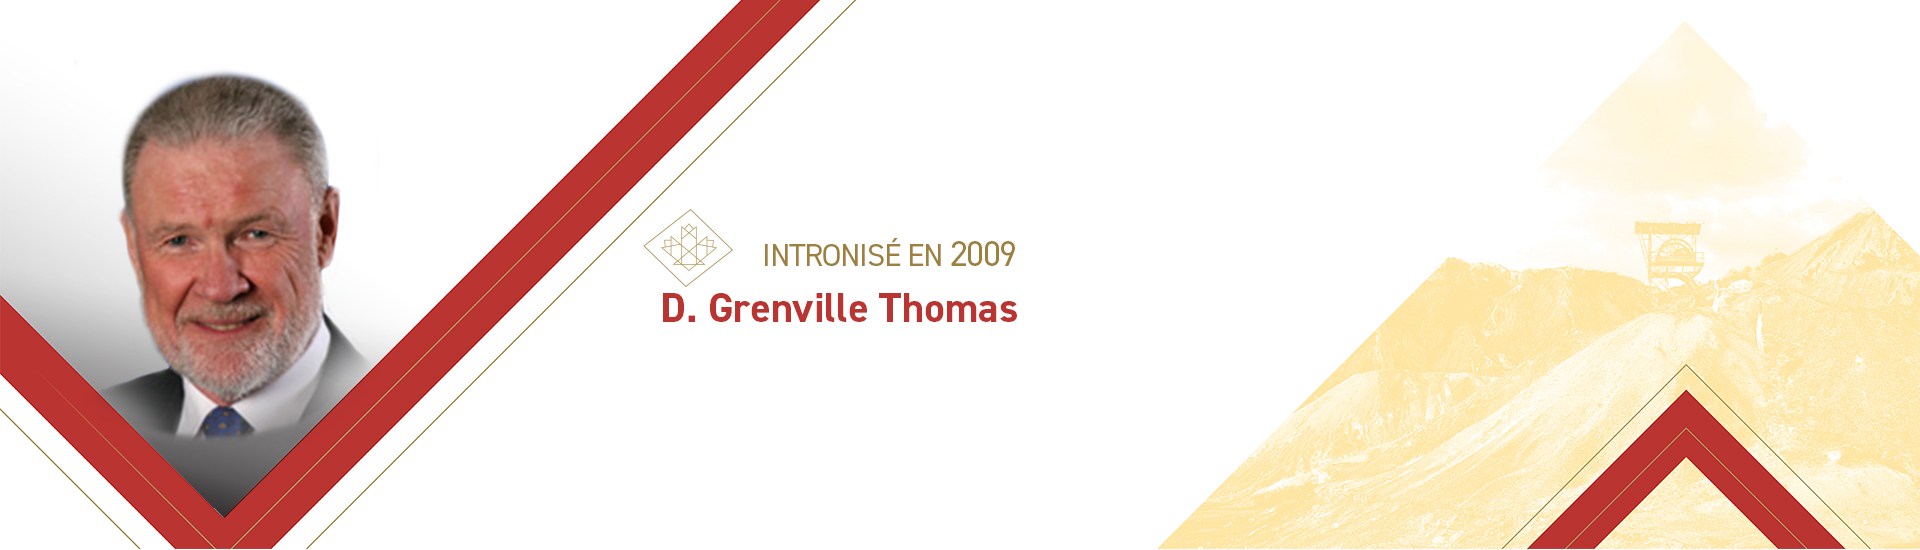 D. Grenville Thomas (b. 1941)